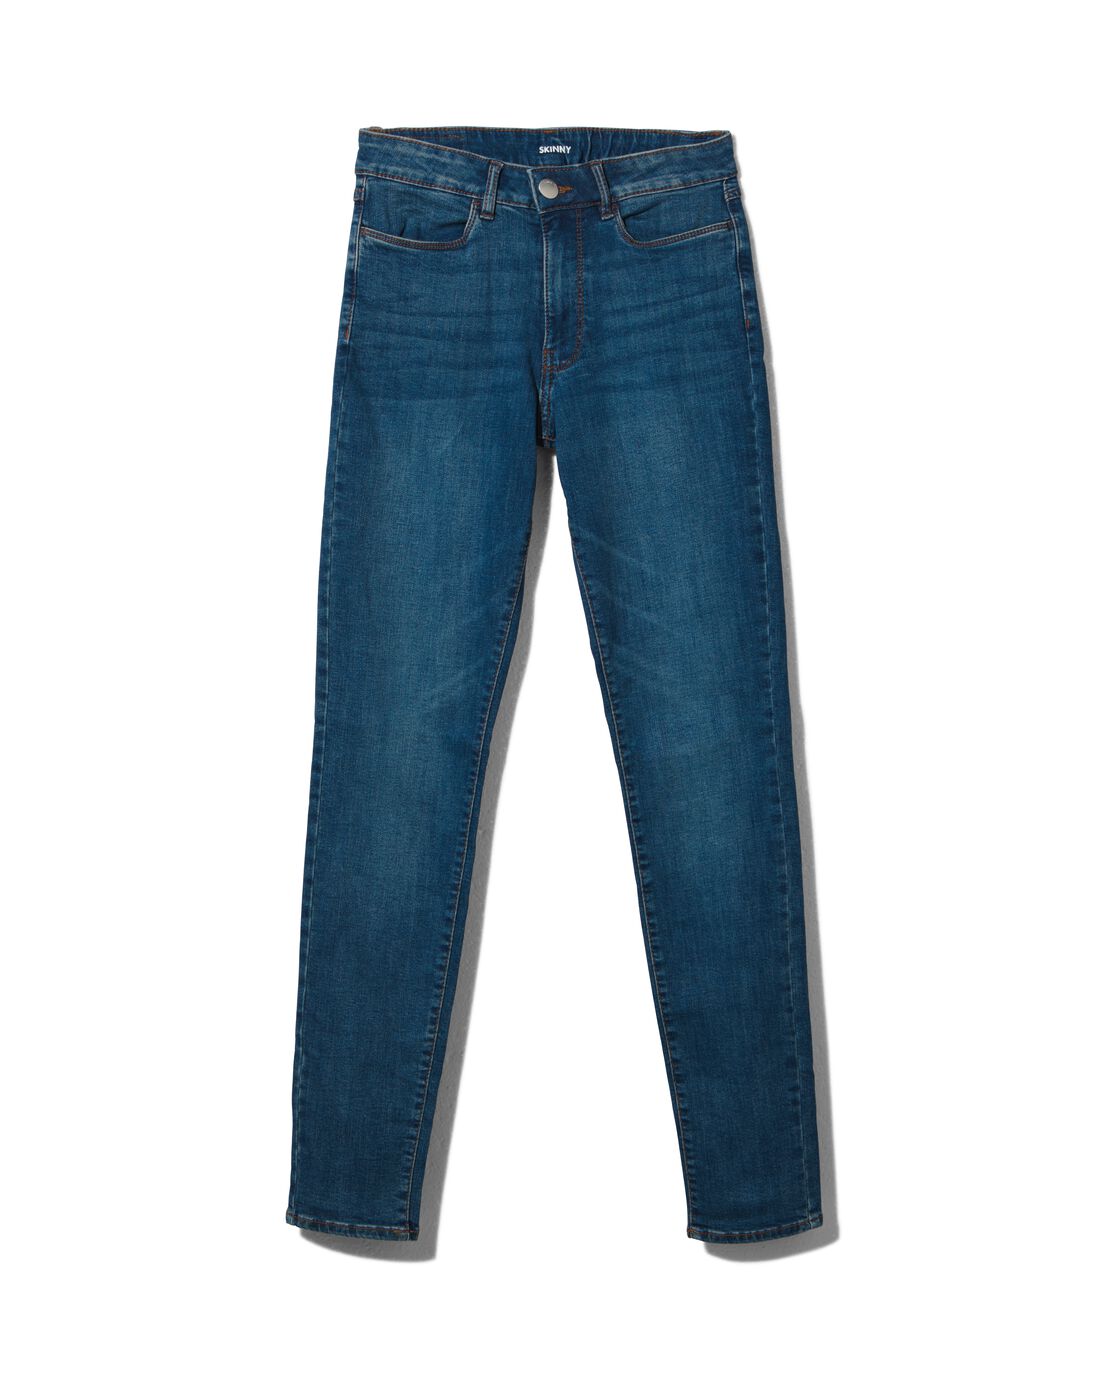 HEMA Dames Jeans - Skinny Fit Middenblauw (middenblauw)